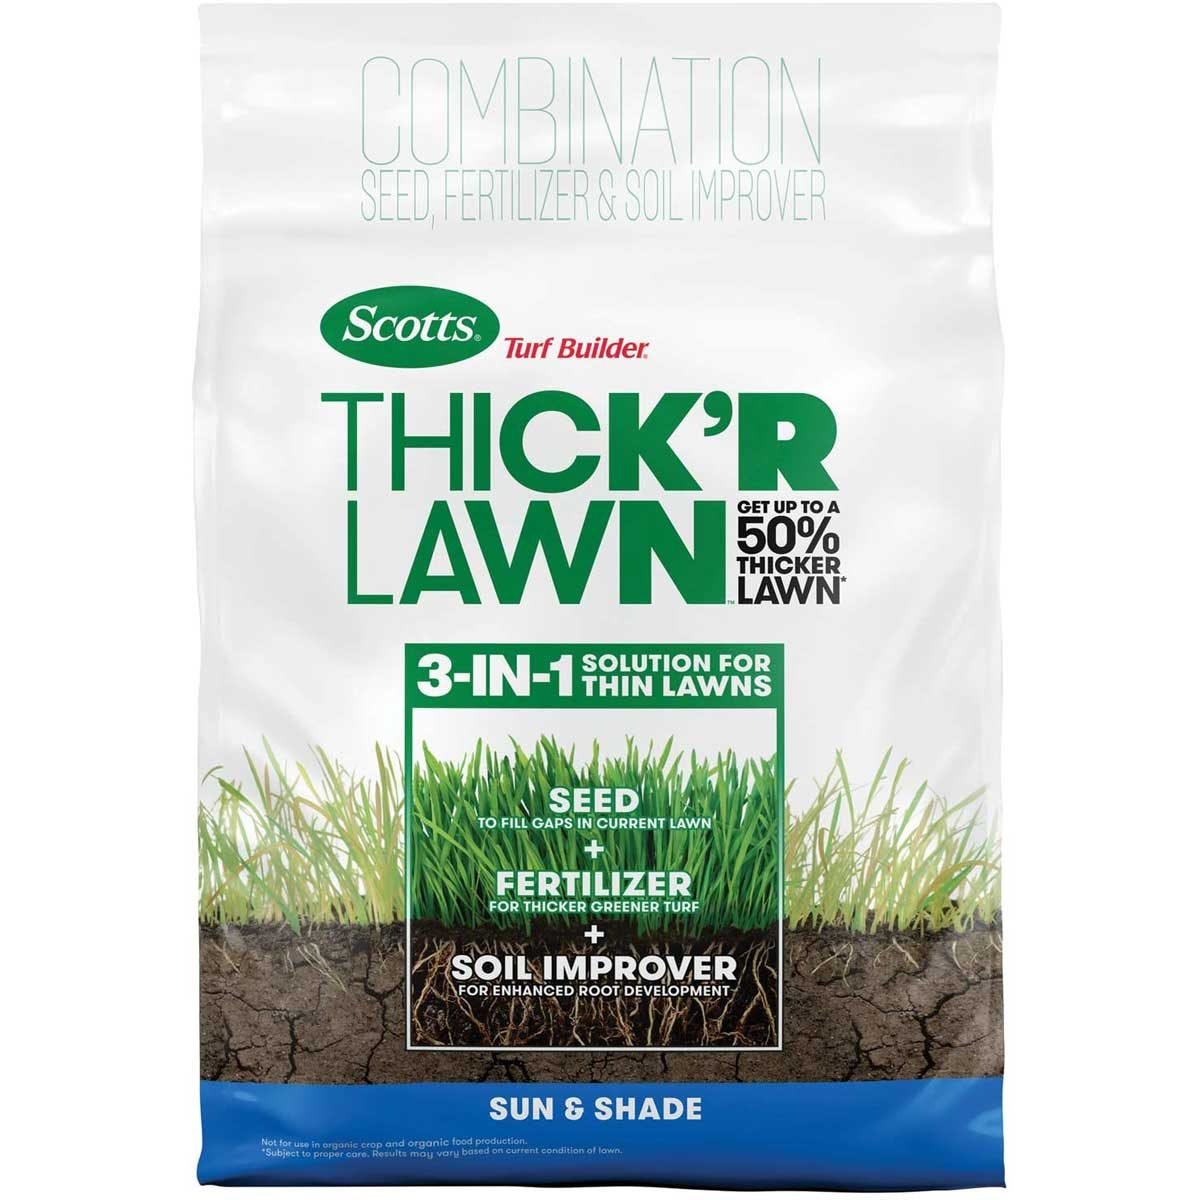 Spring Lawn Fertilizer: 7 of Our Best Picks